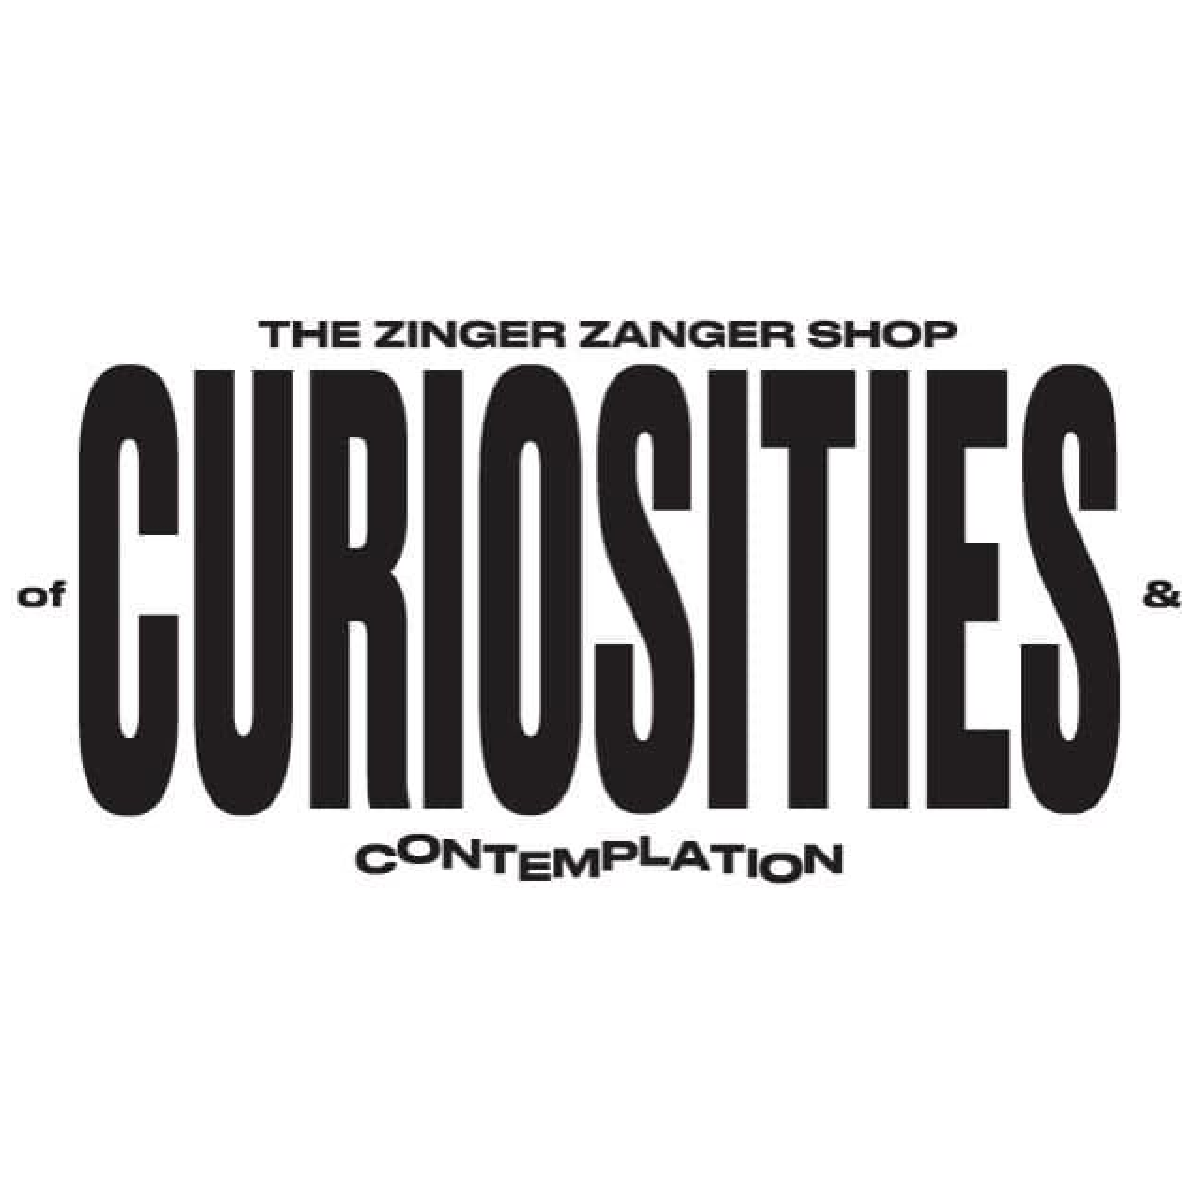 The Zinger Zanger Shop of Curiosities & Contemplation